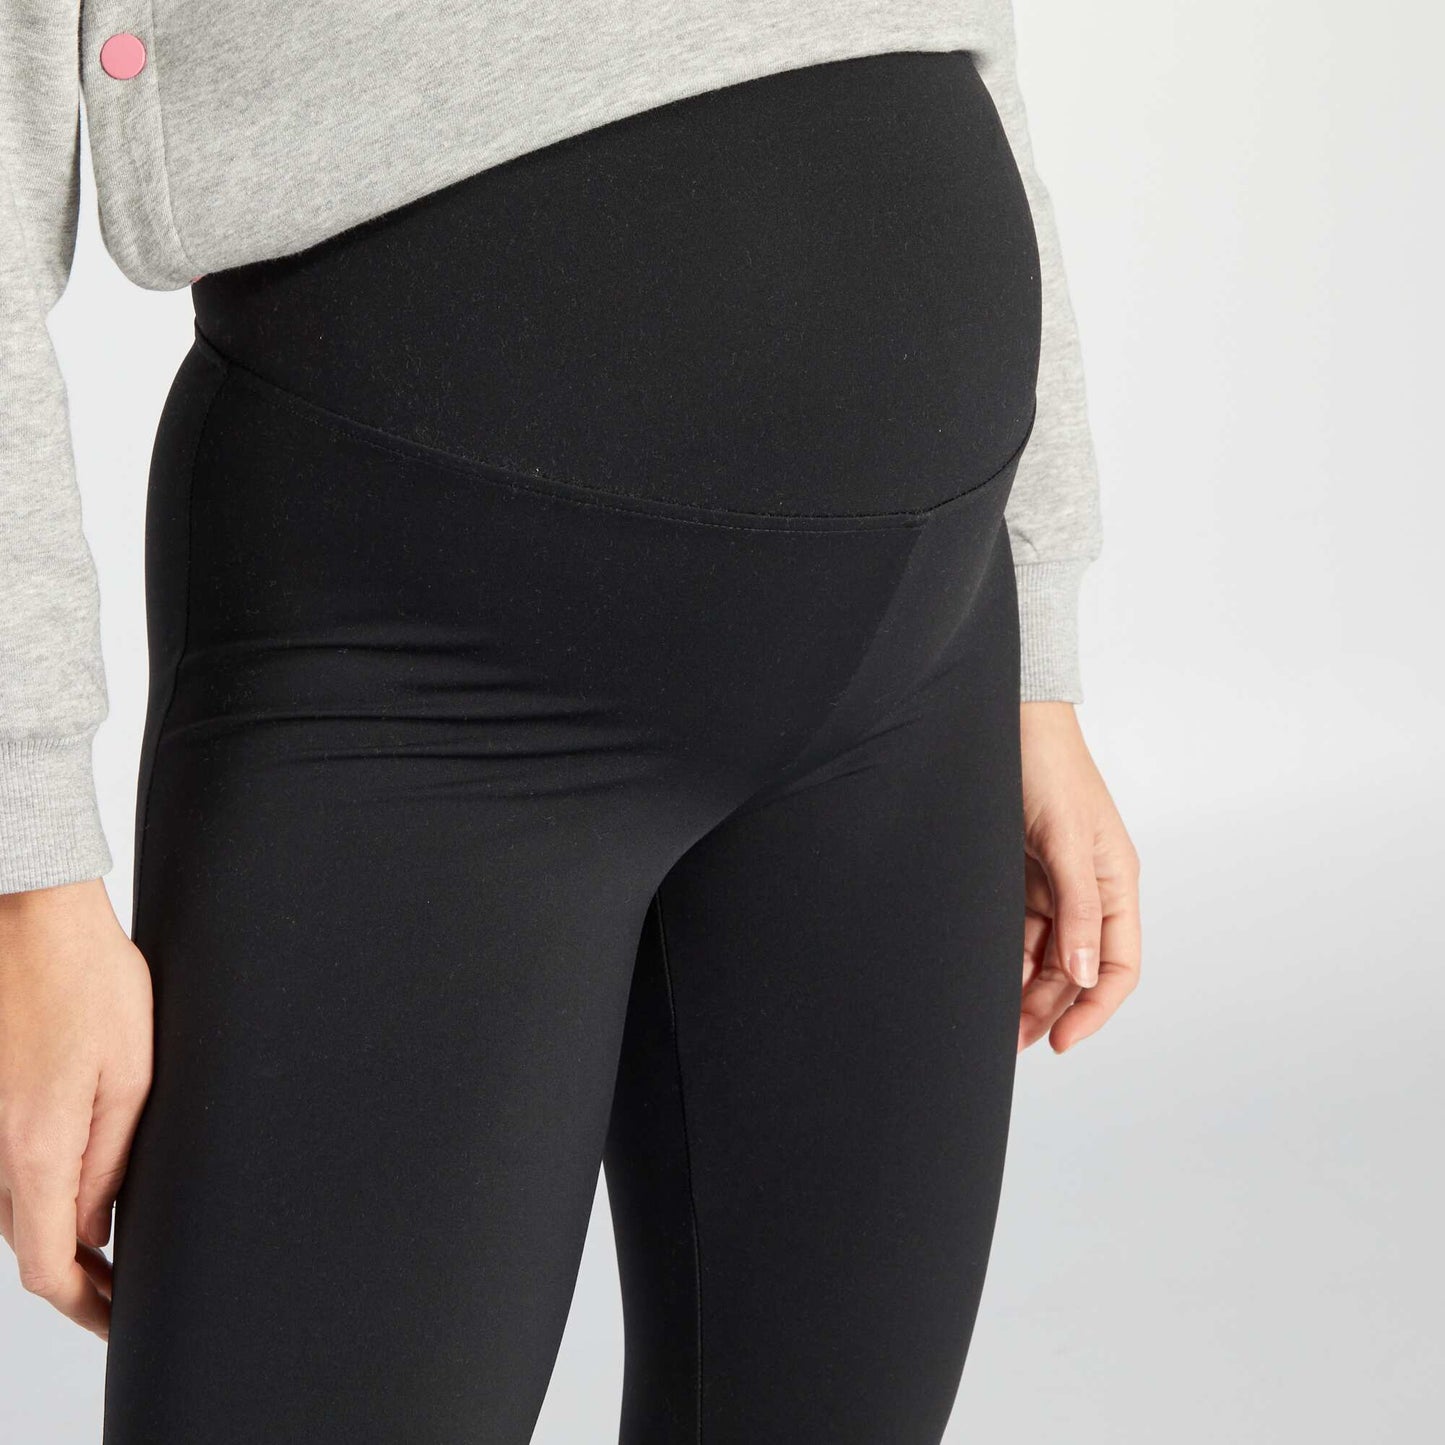 Maternity sports leggings black